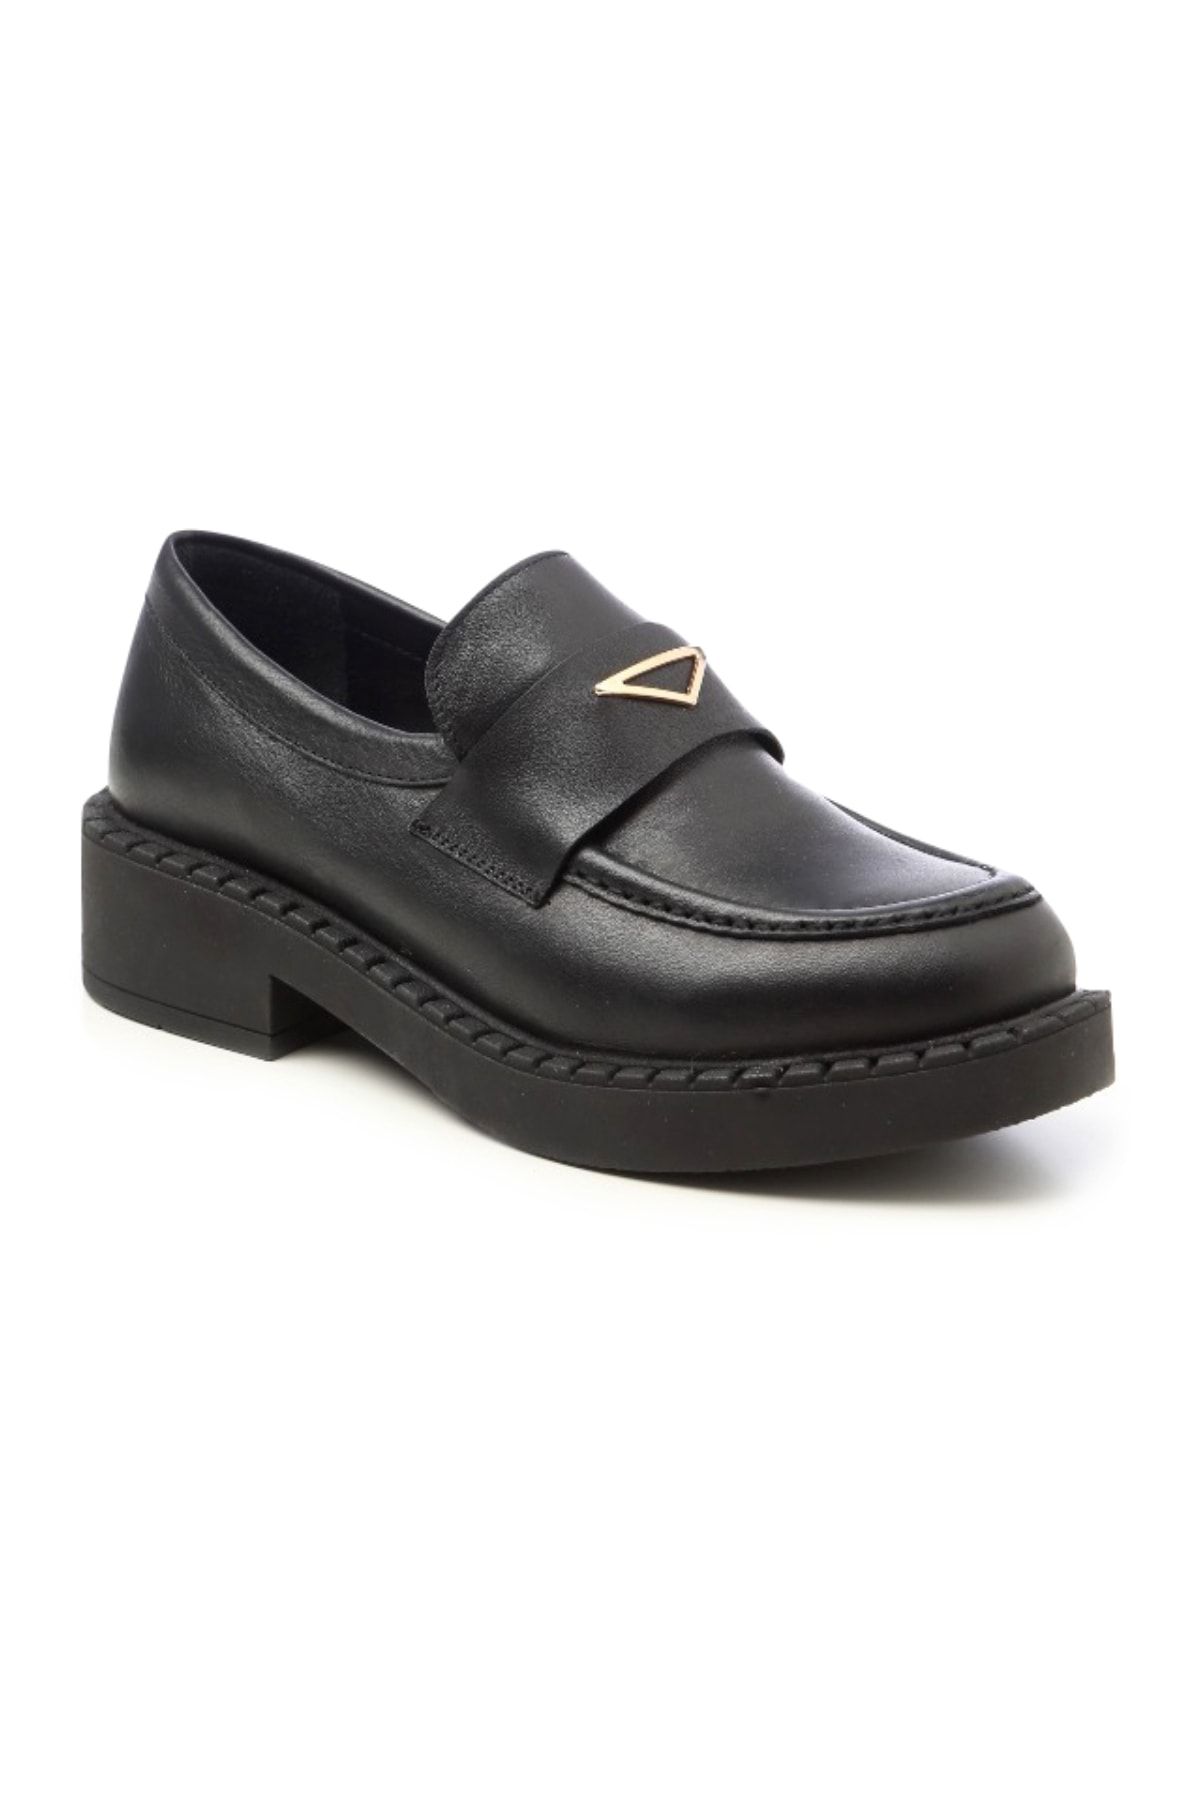 Giuseppe Mengoni Kadın Oxford/ayakkabı Mx-m.21600 Za Oxford Siyah Napa